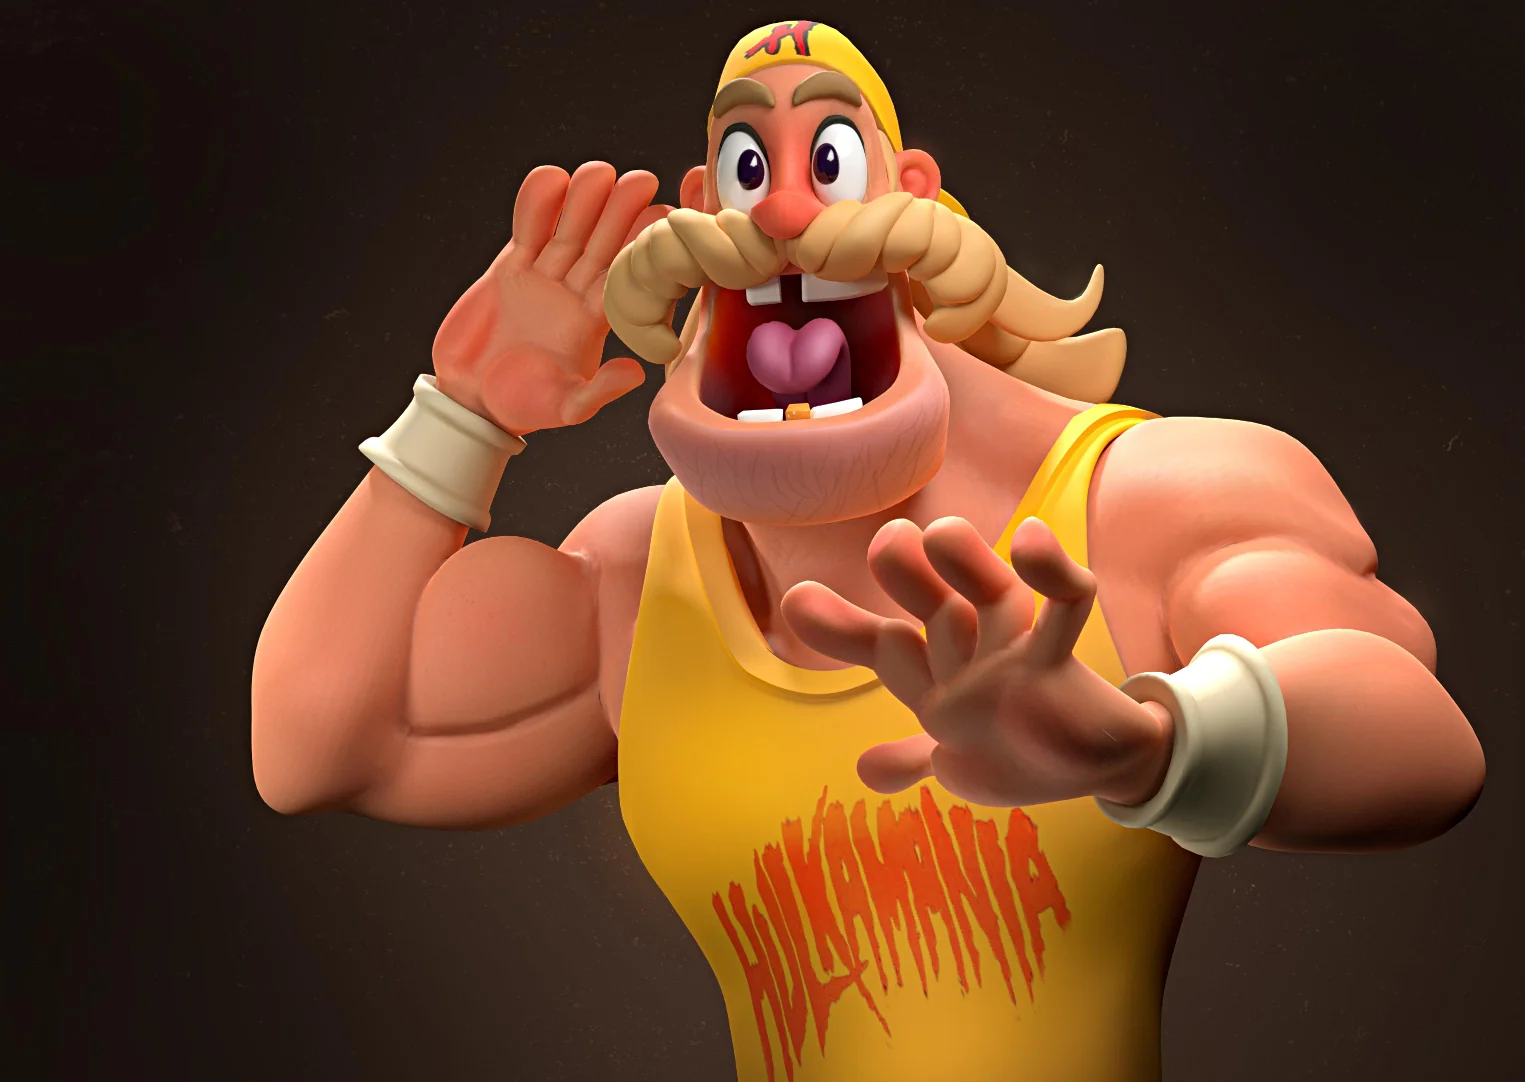 Stylized Portrait of Hulk Hogan